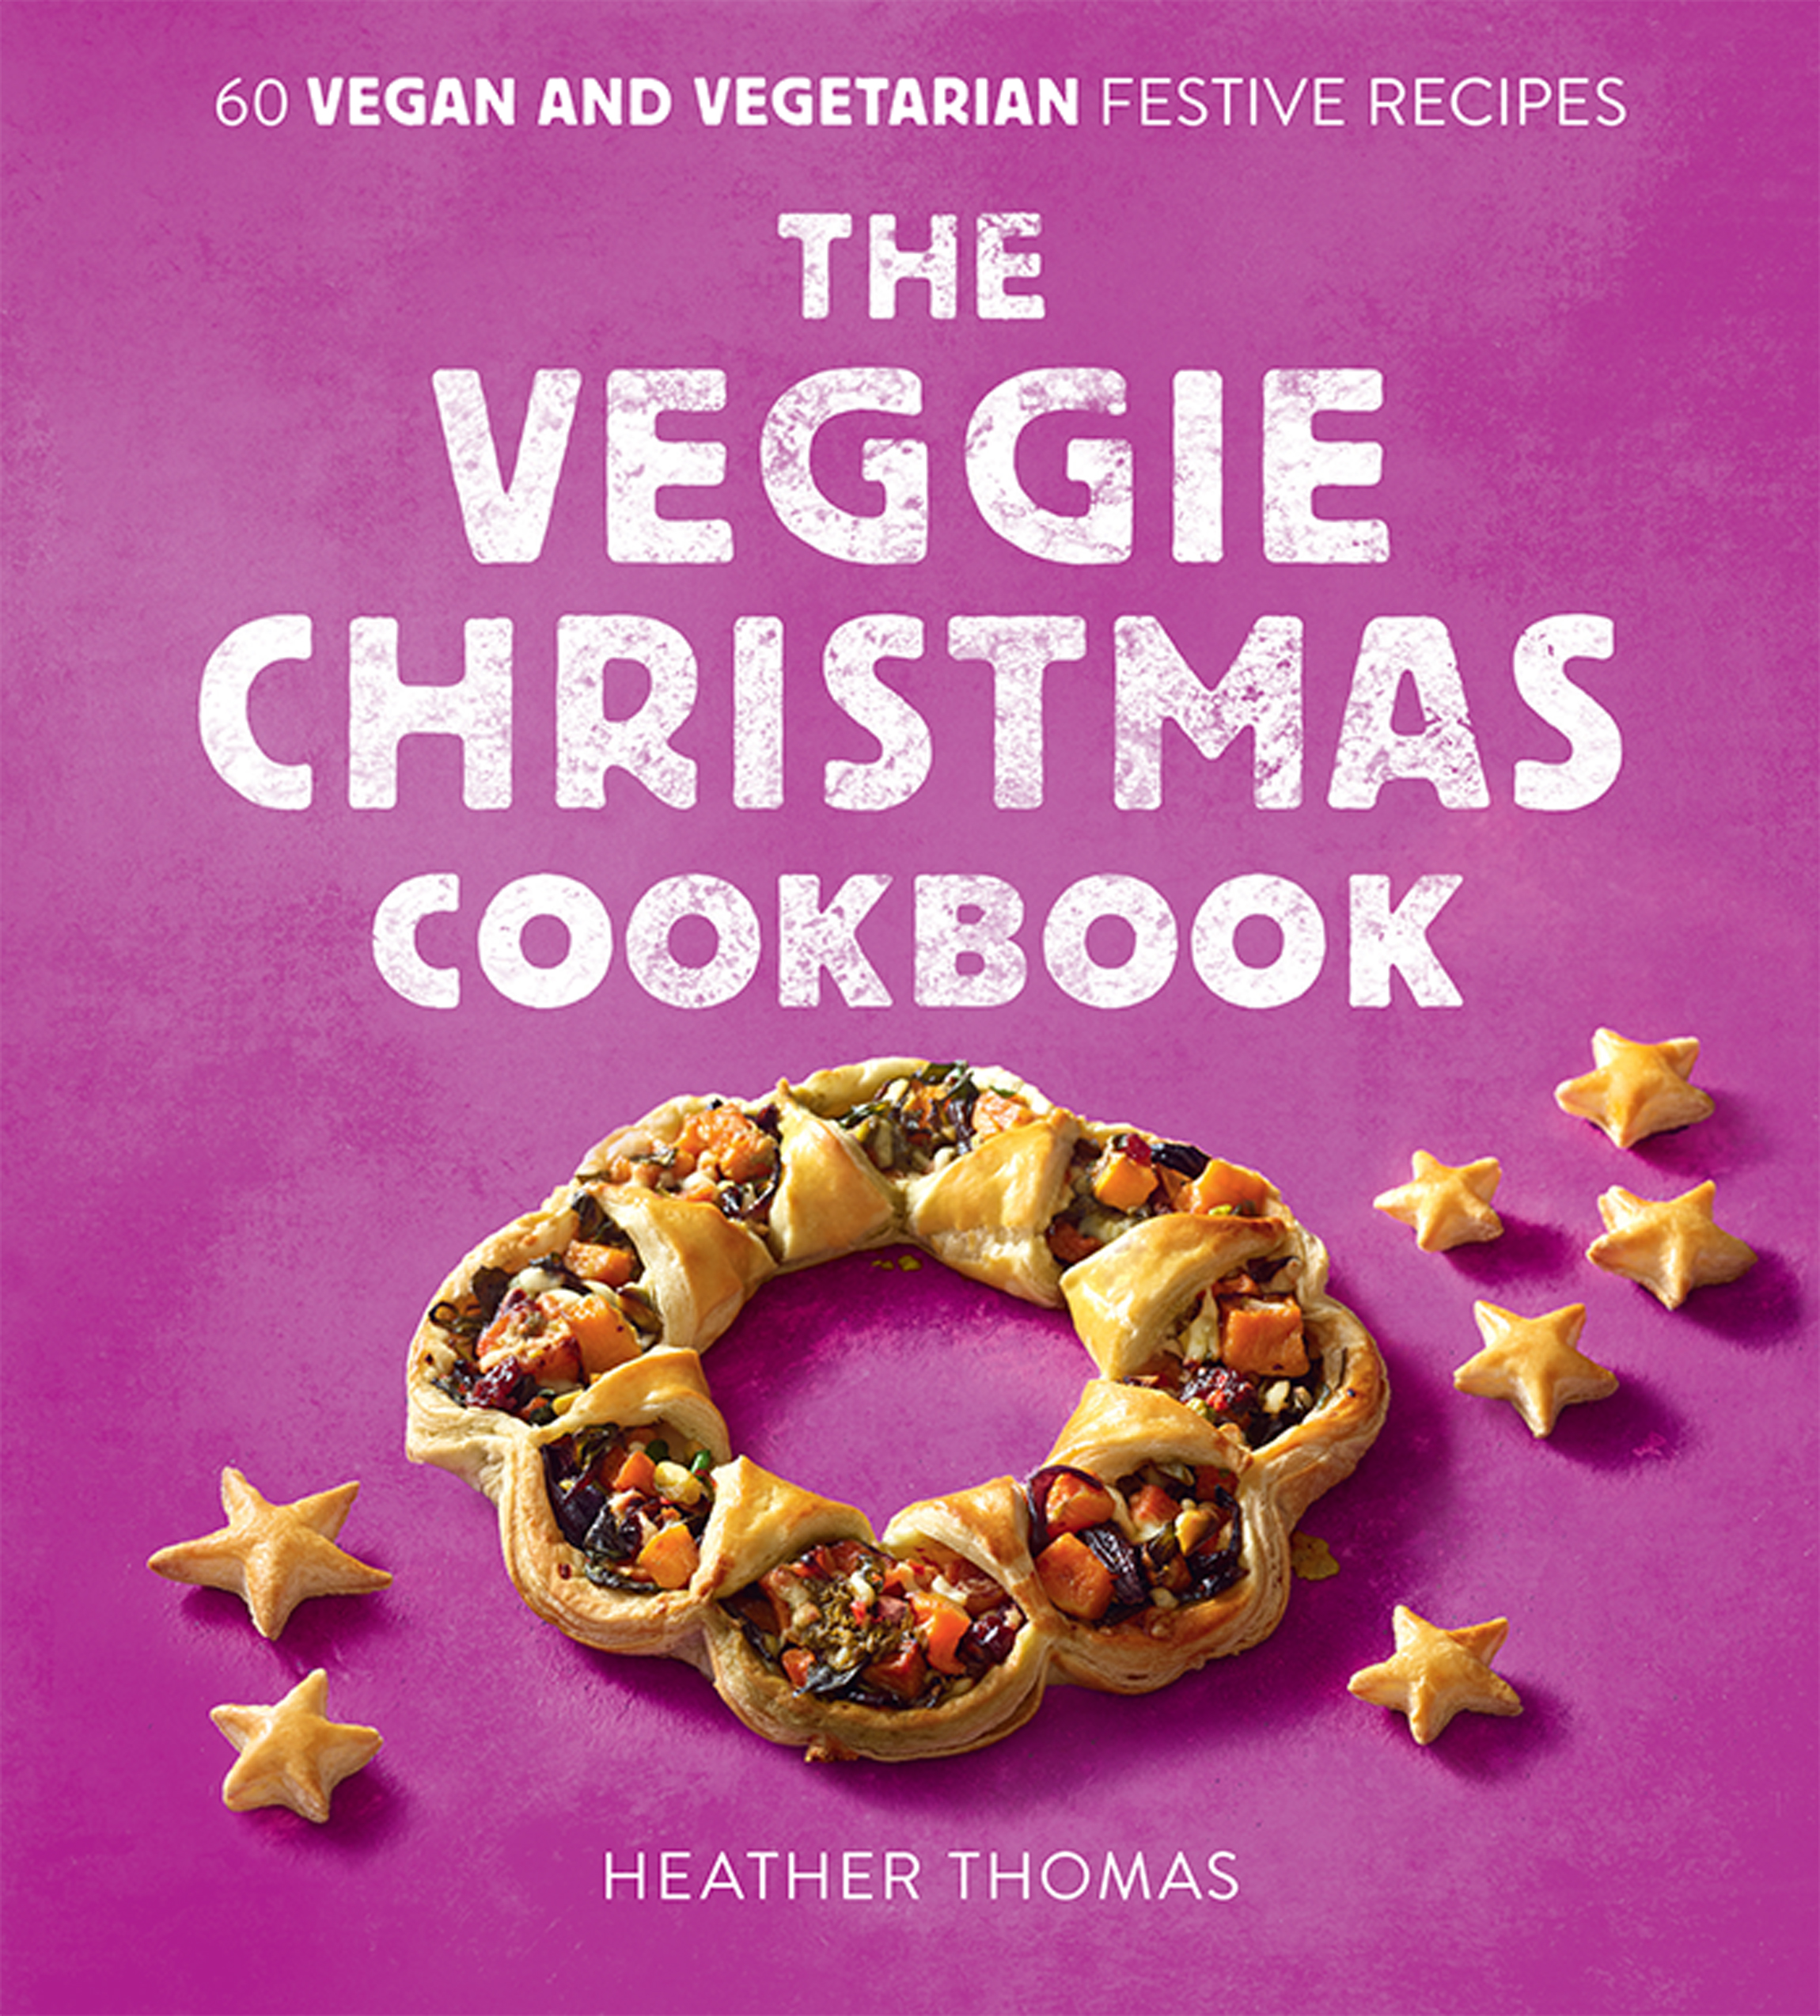 The Veggie Christmas Cookbook by Heather Thomas